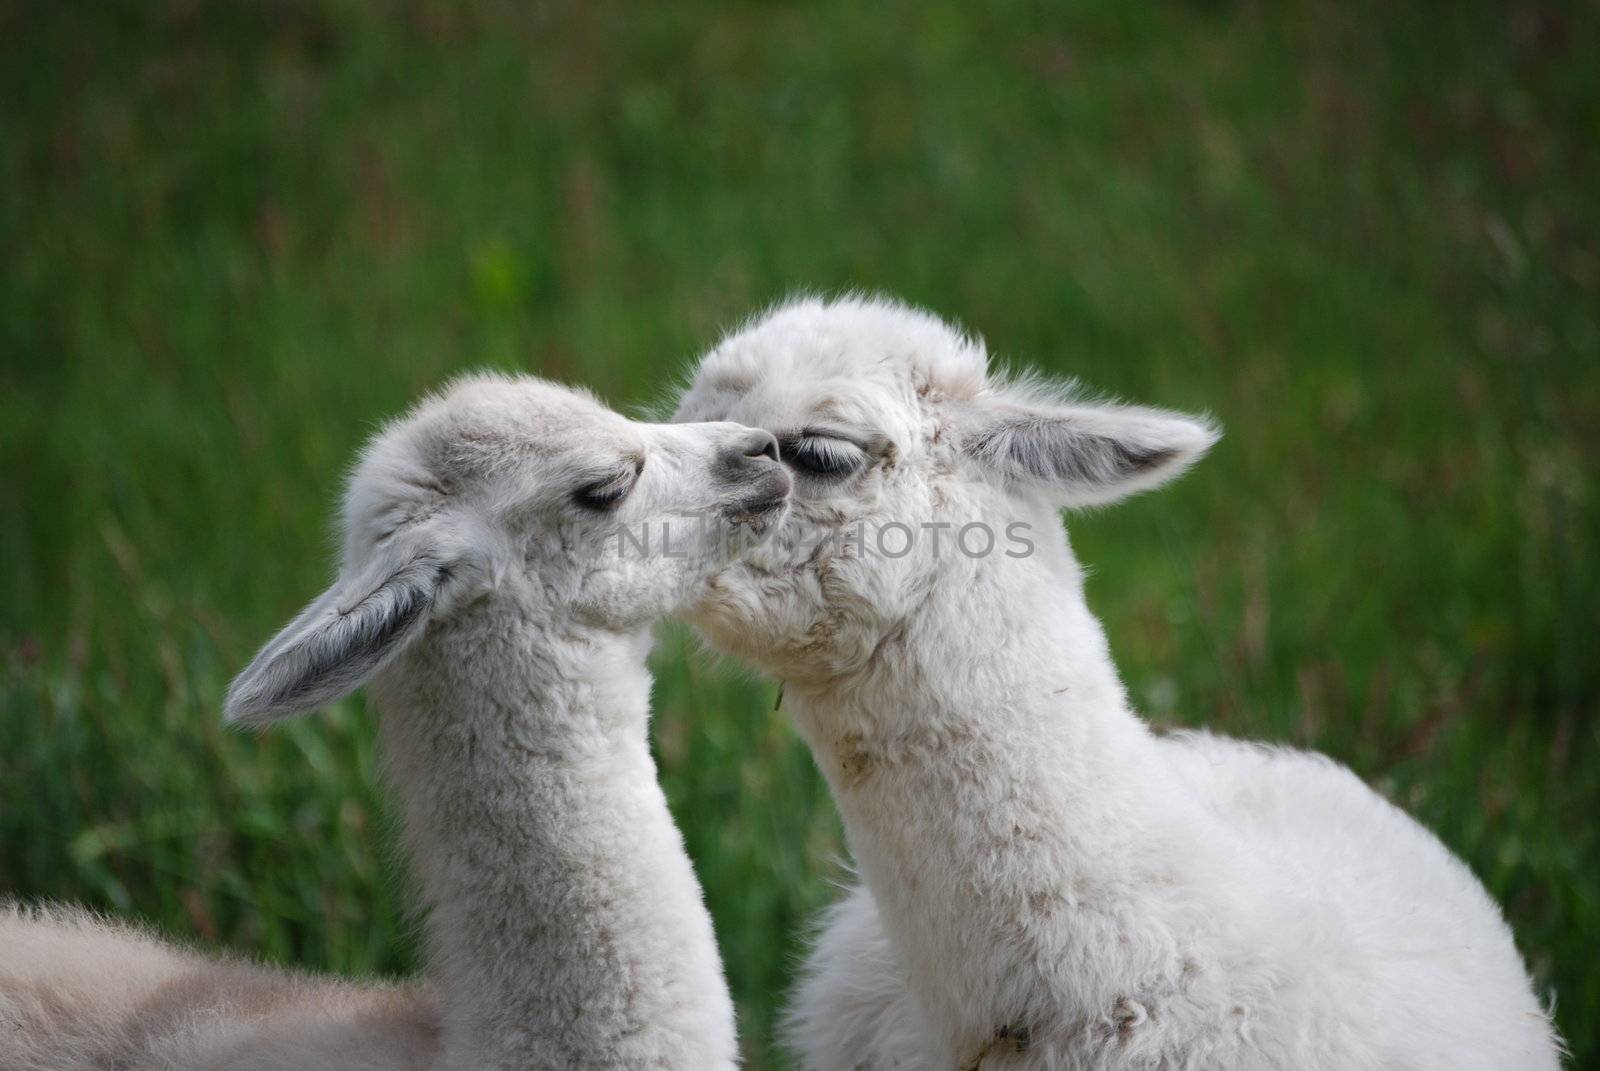 Two Baby Llamas by TrekHound